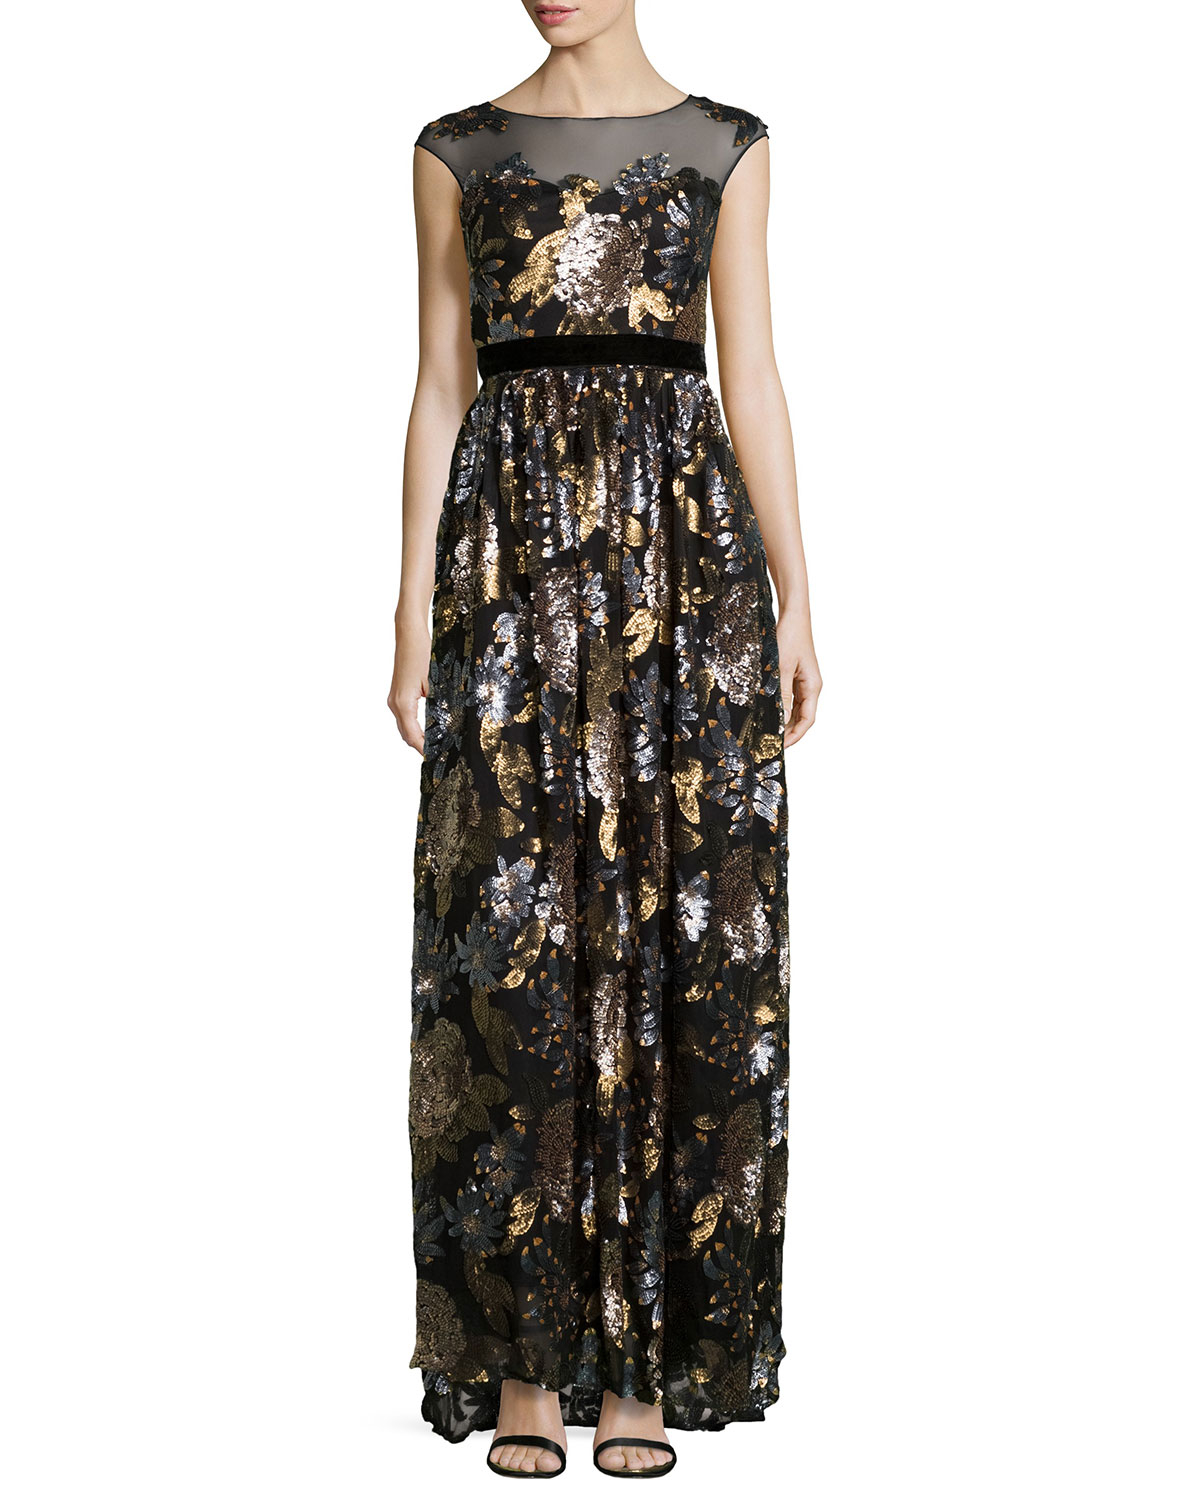 Lyst - Badgley mischka Floral-Sequined Sleeveless Gown in Metallic